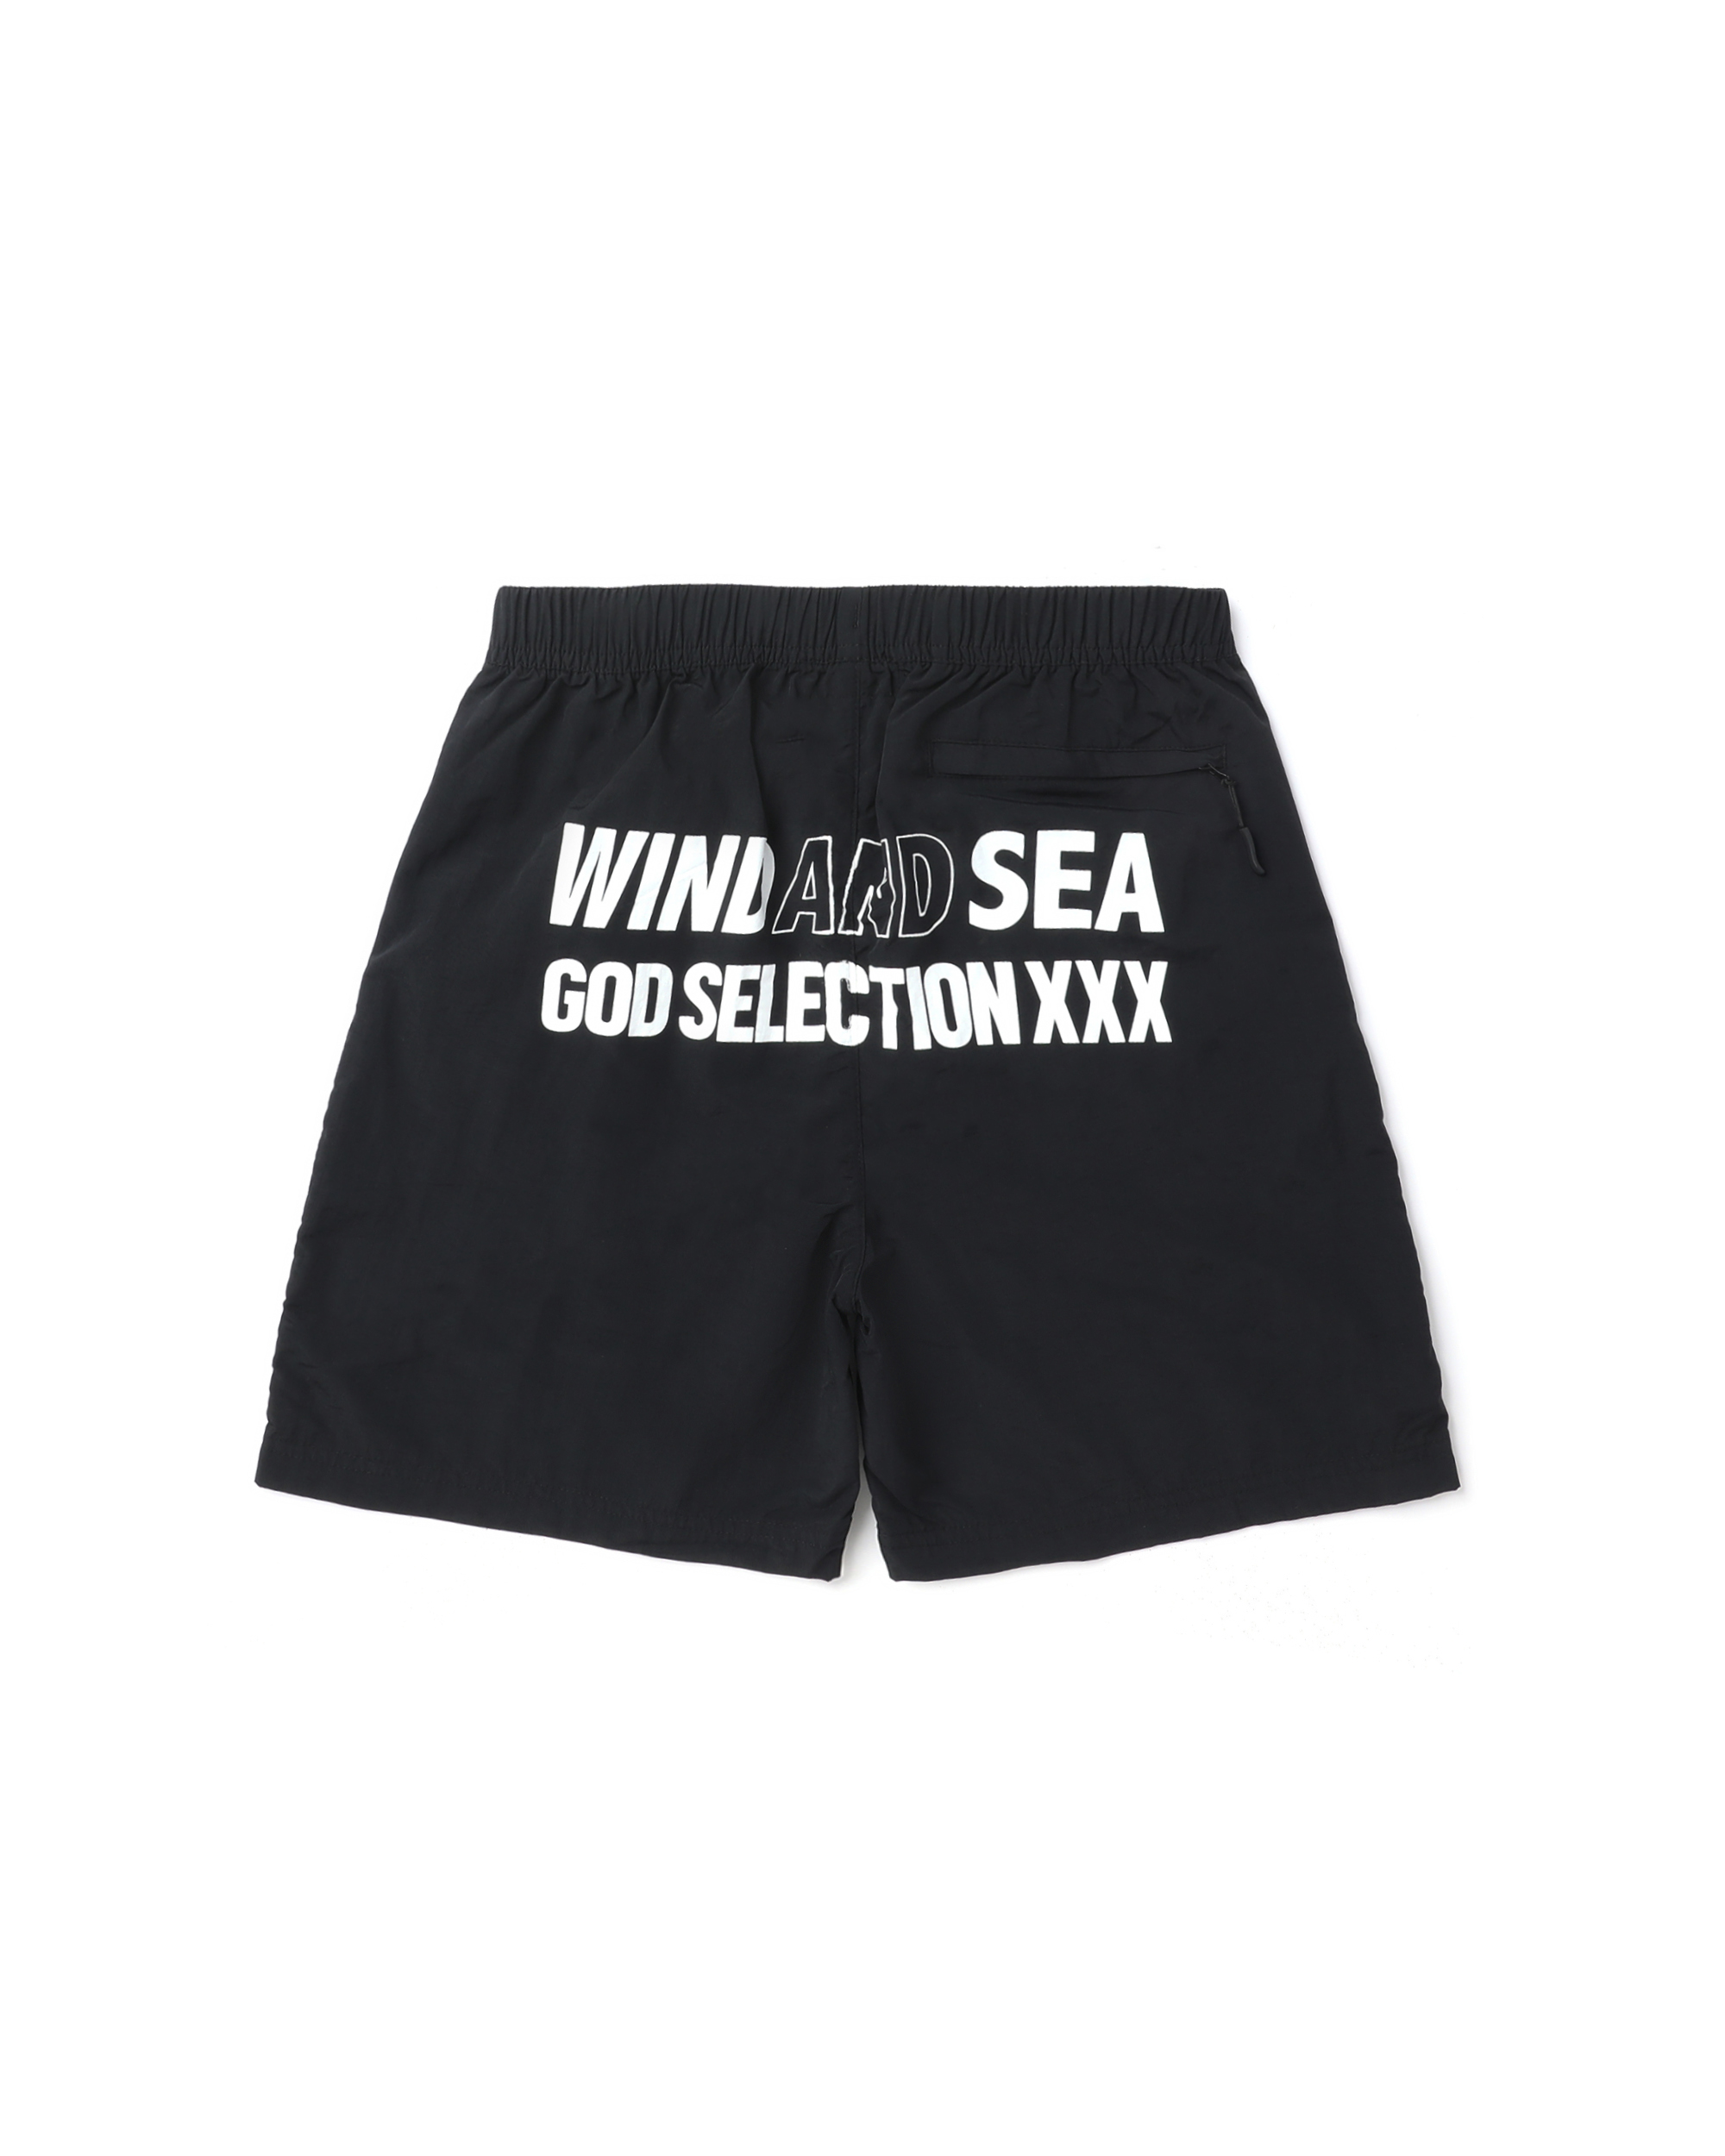 GOD SELECTION XXX WIND AND SEA 联乘系列徽标印花短裤